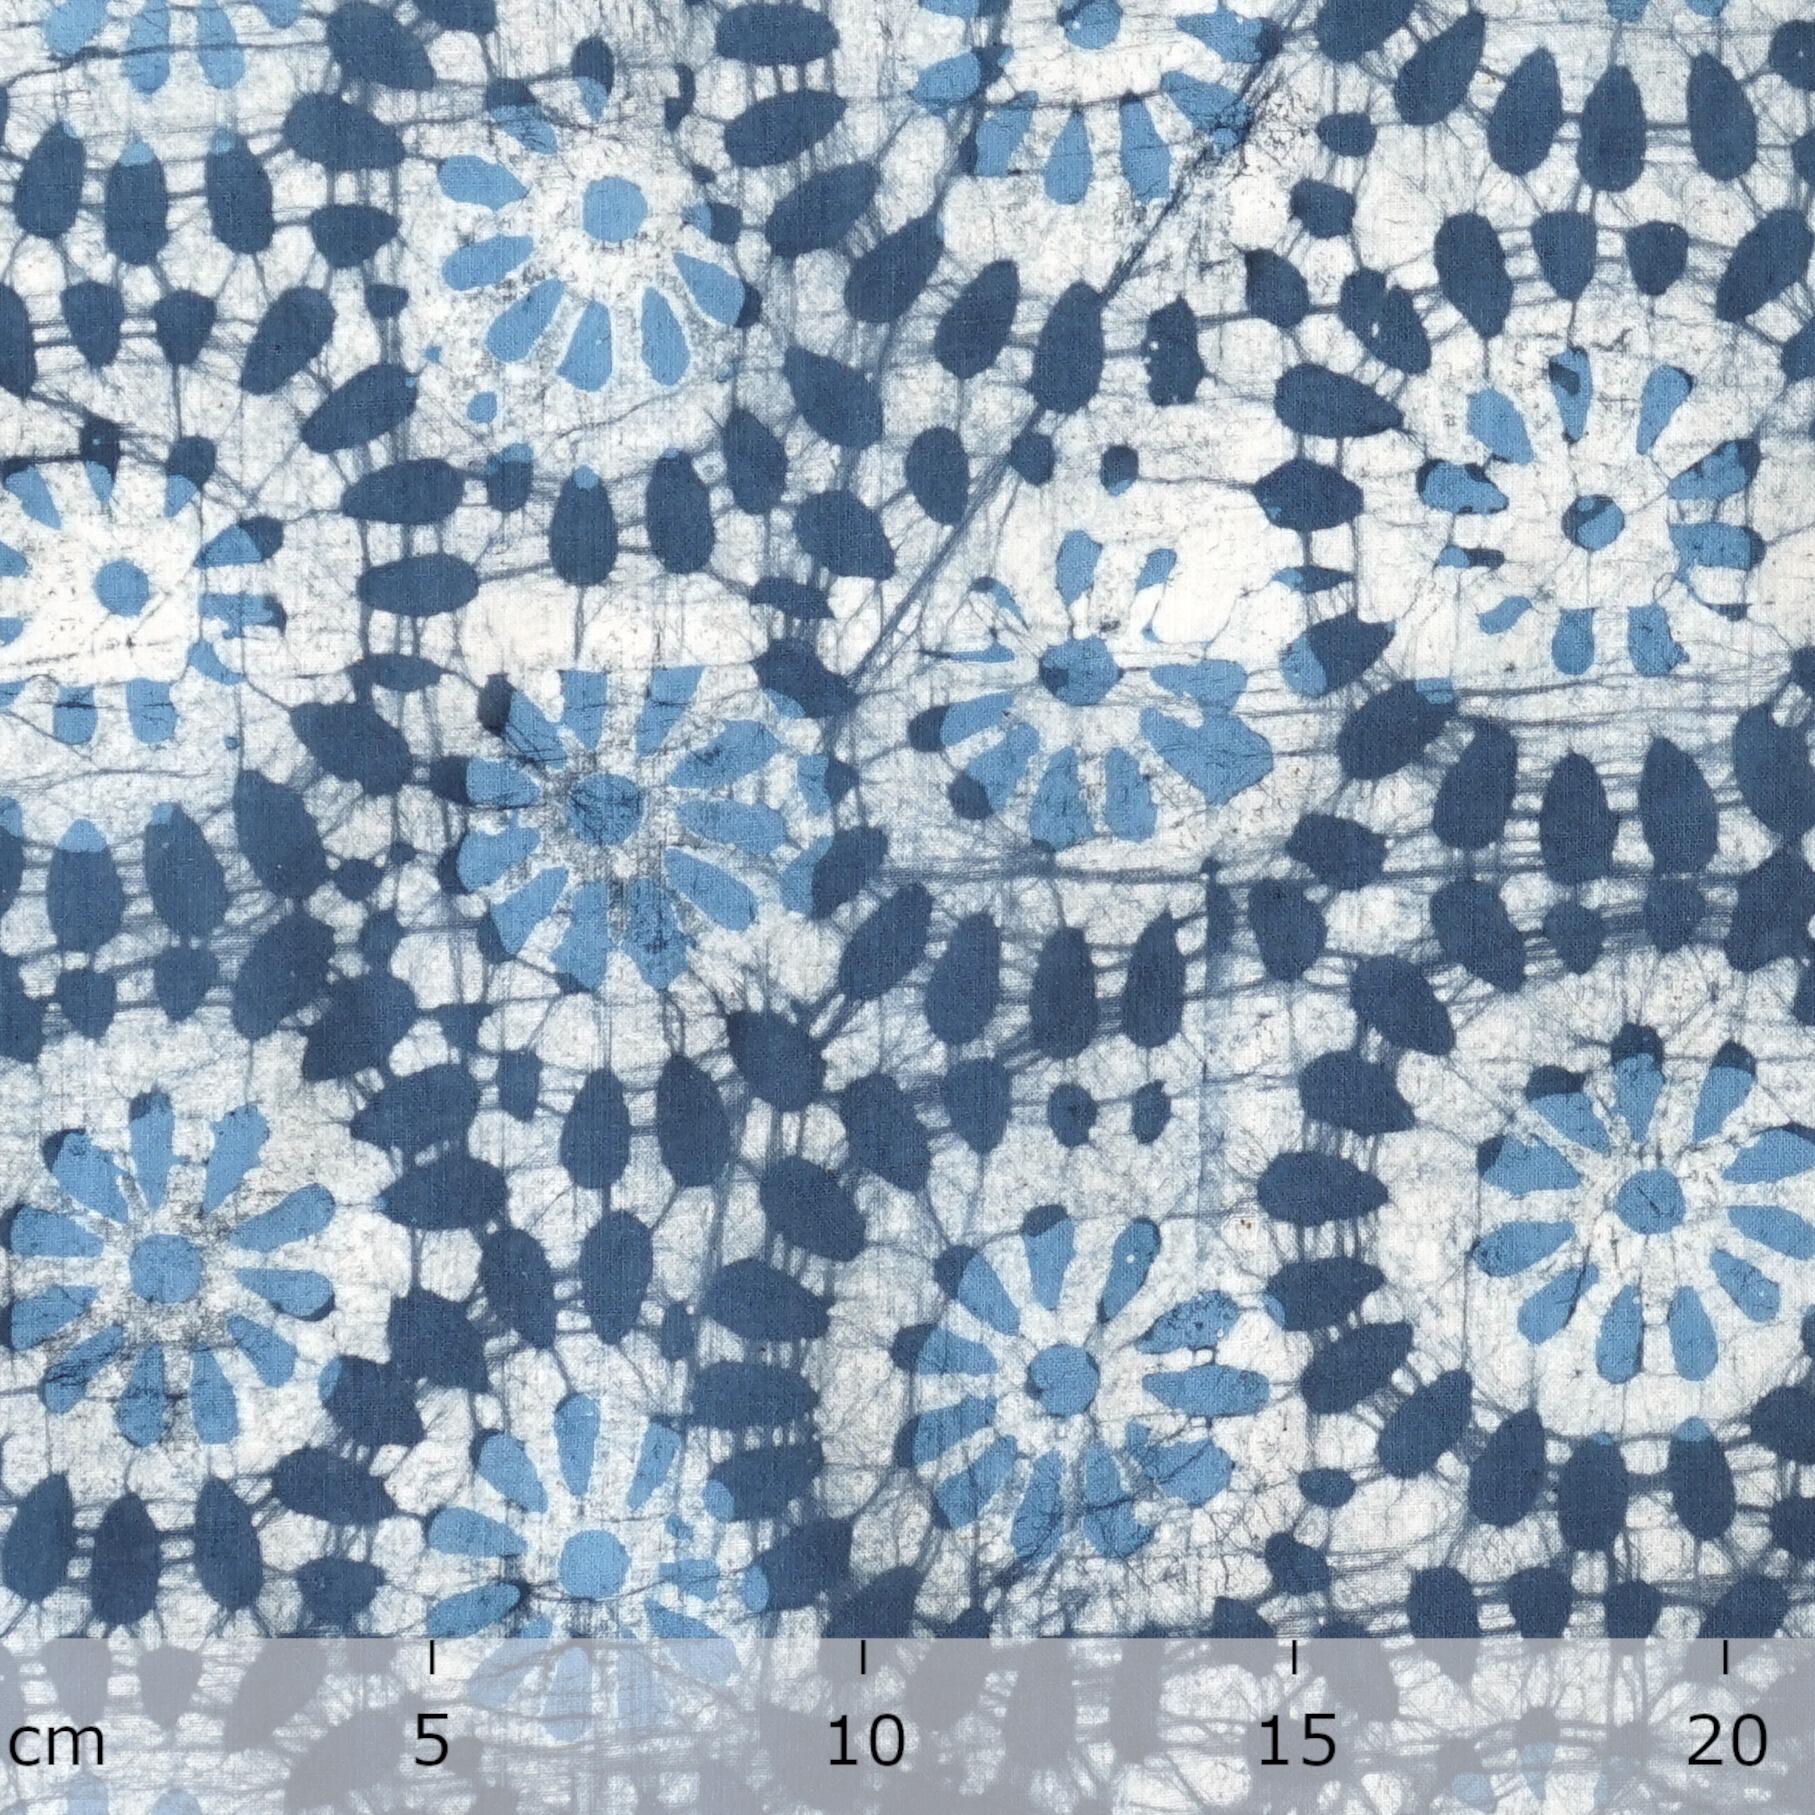 Block-Printed Batik Fabric - Cotton Cloth - Sky Dance Design - Ruler